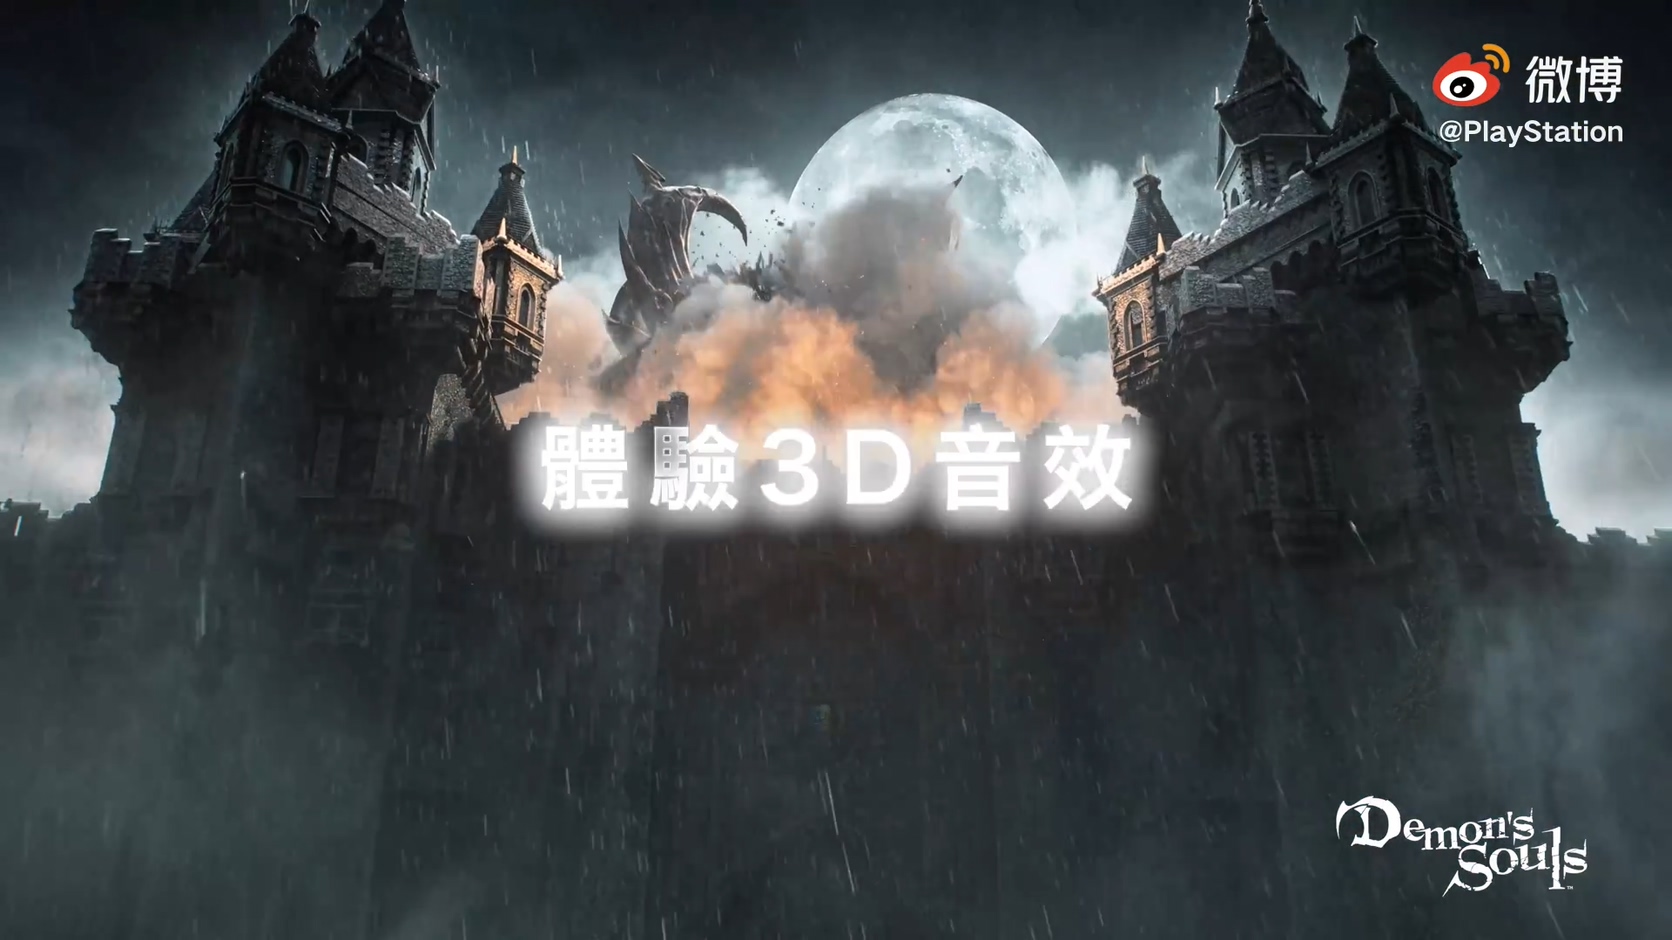 PS5全新中文宣传片公布 创新游戏境界